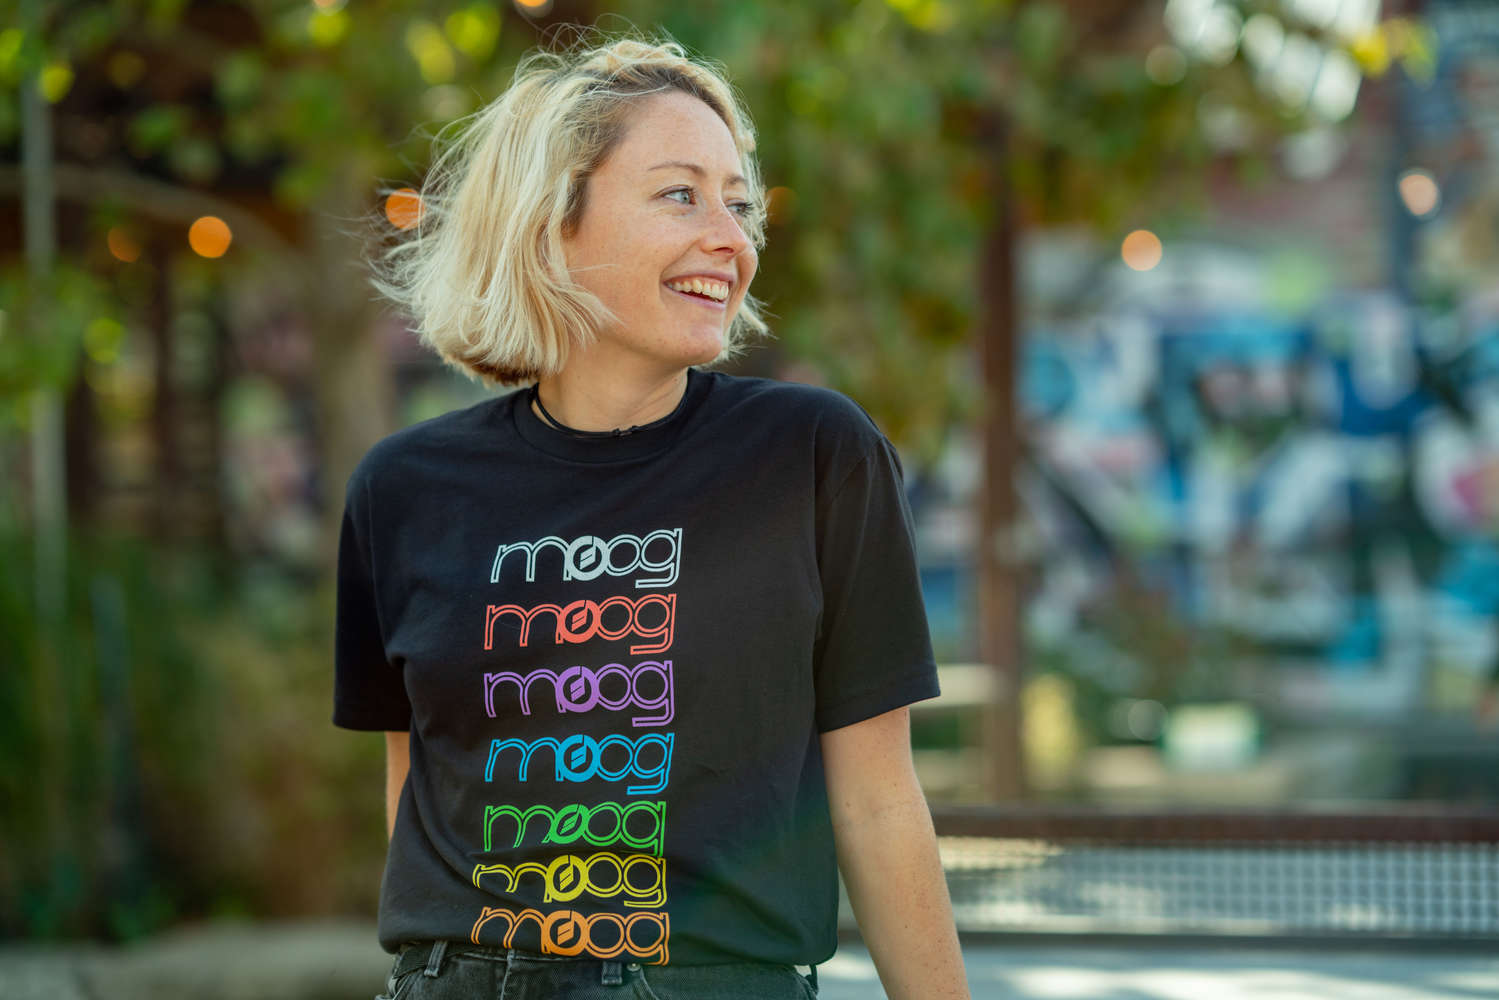 Moog Rainbow Spectrum T-Shirt - Medium 40232612855 eBay